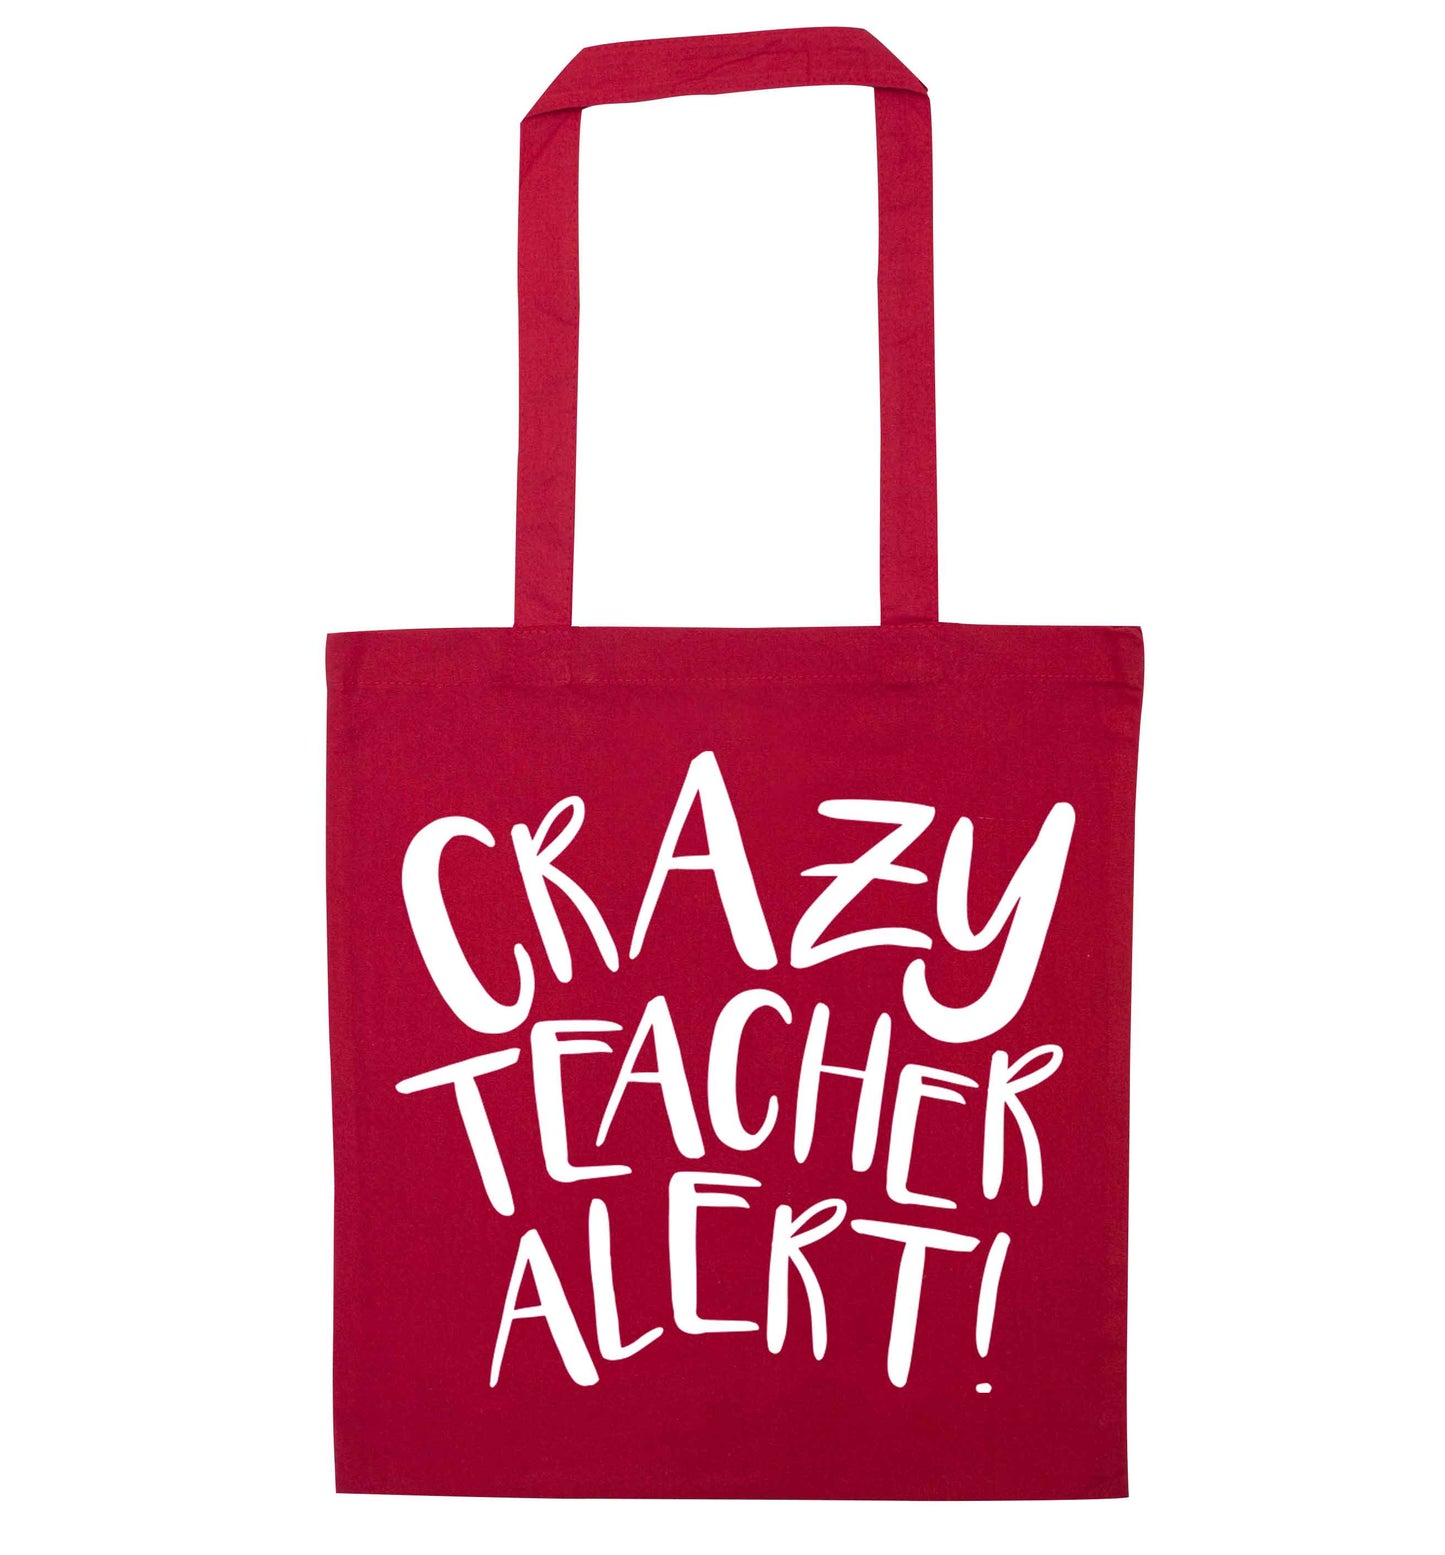 Crazy teacher alert red tote bag